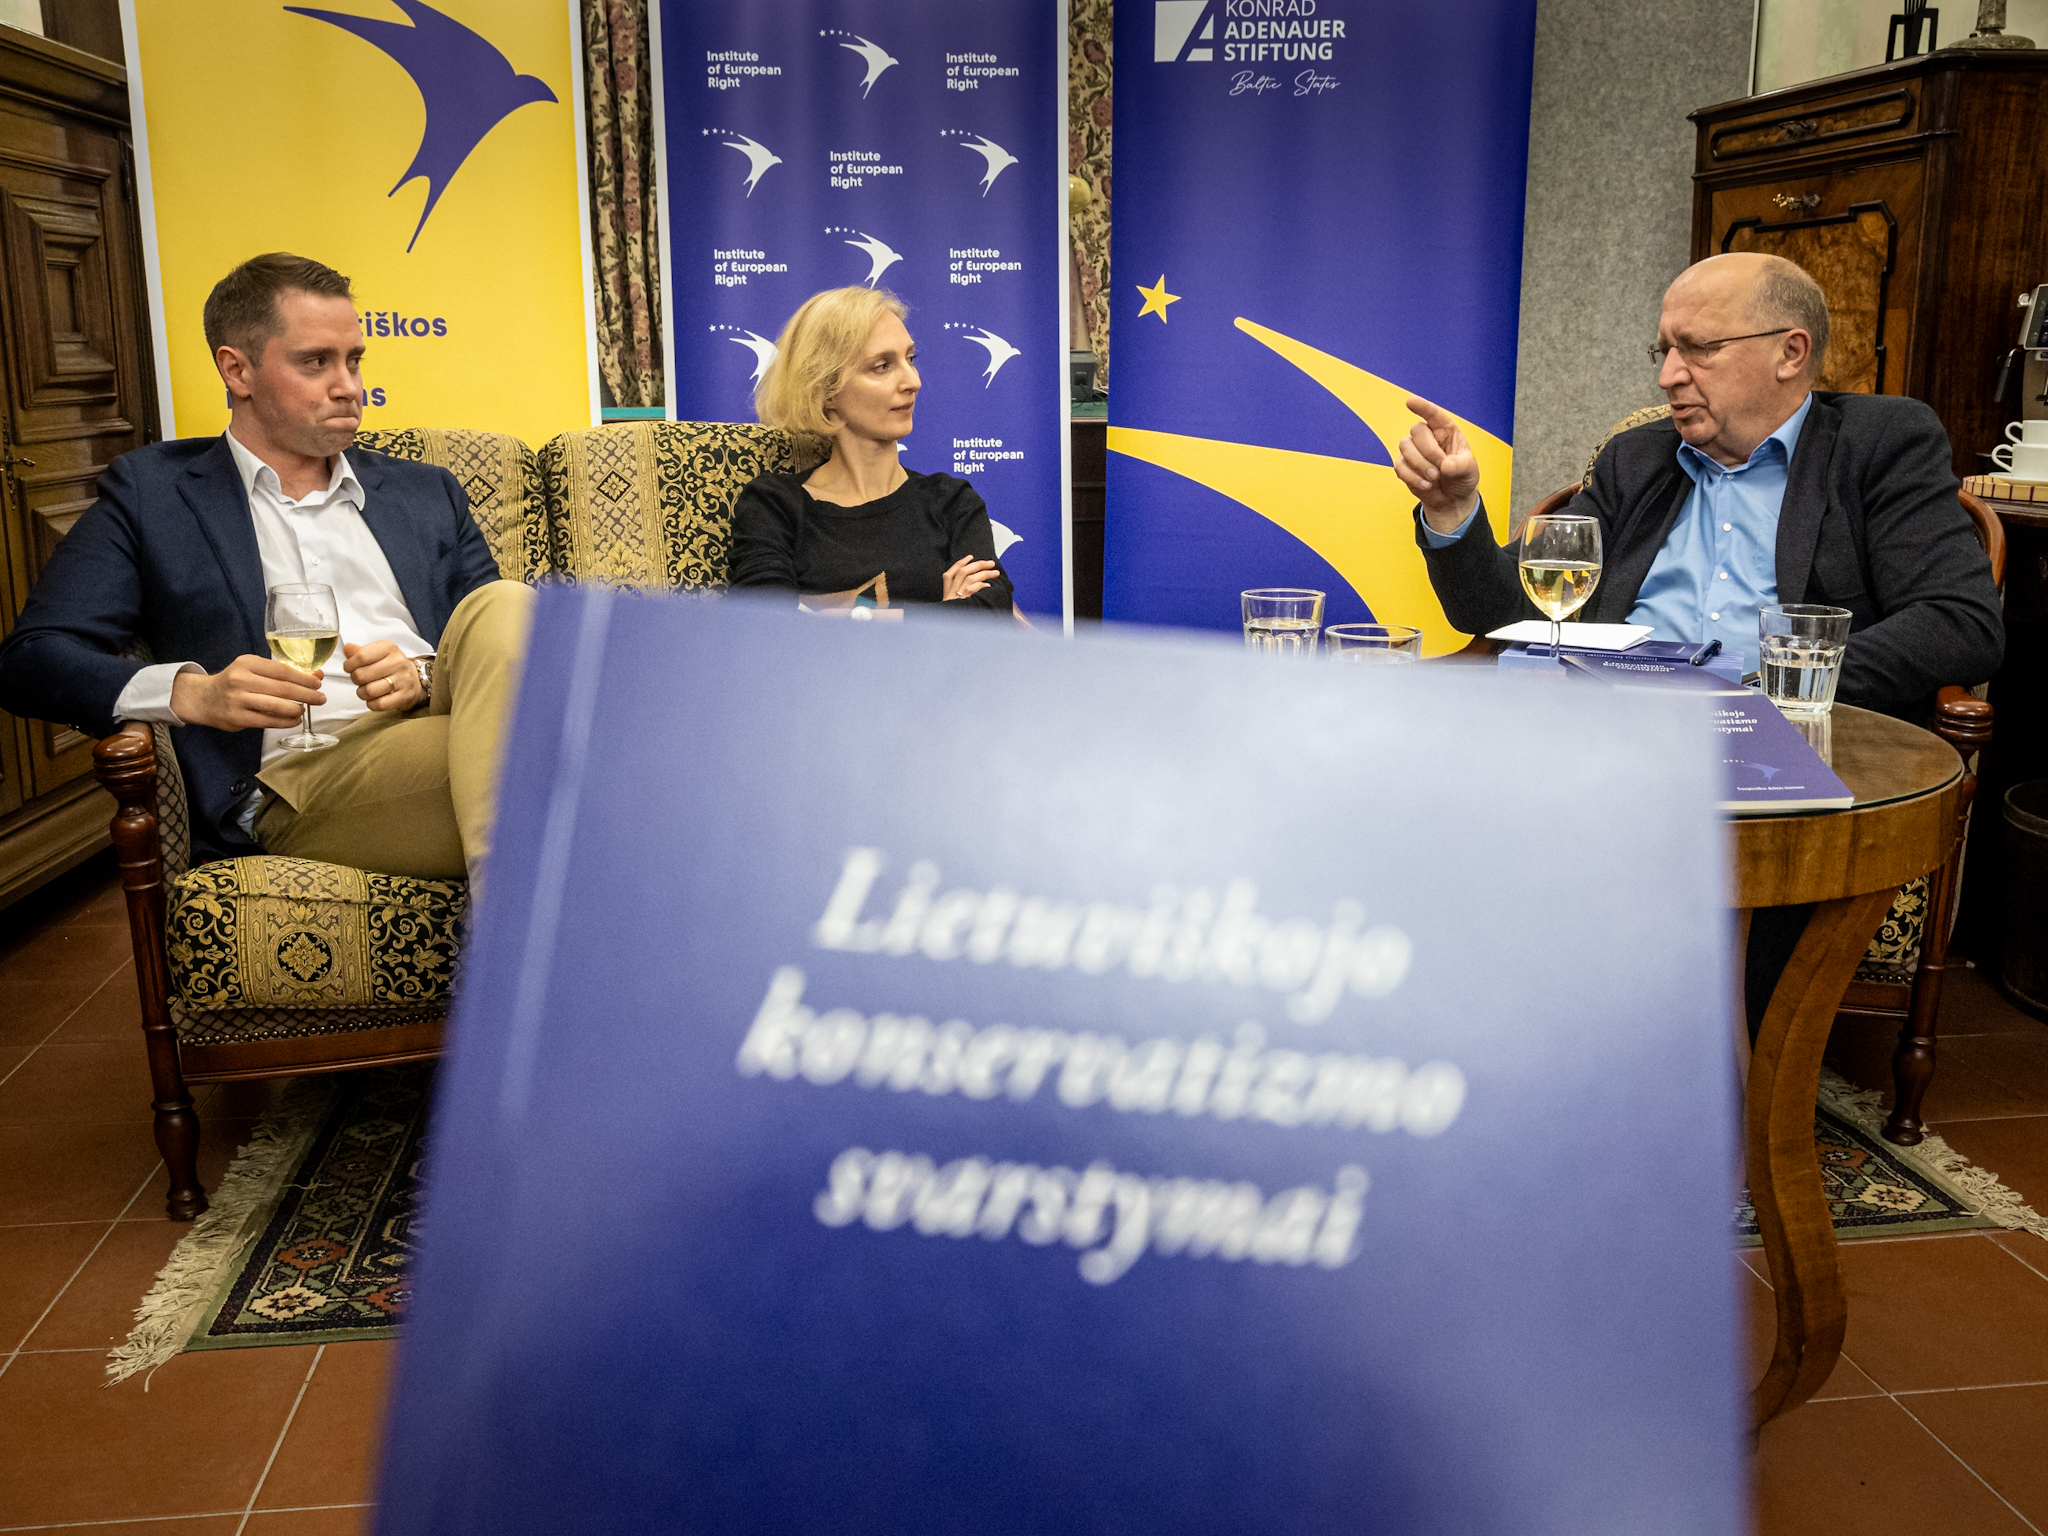 knyga lietuvisko konservatizmo svarstymai